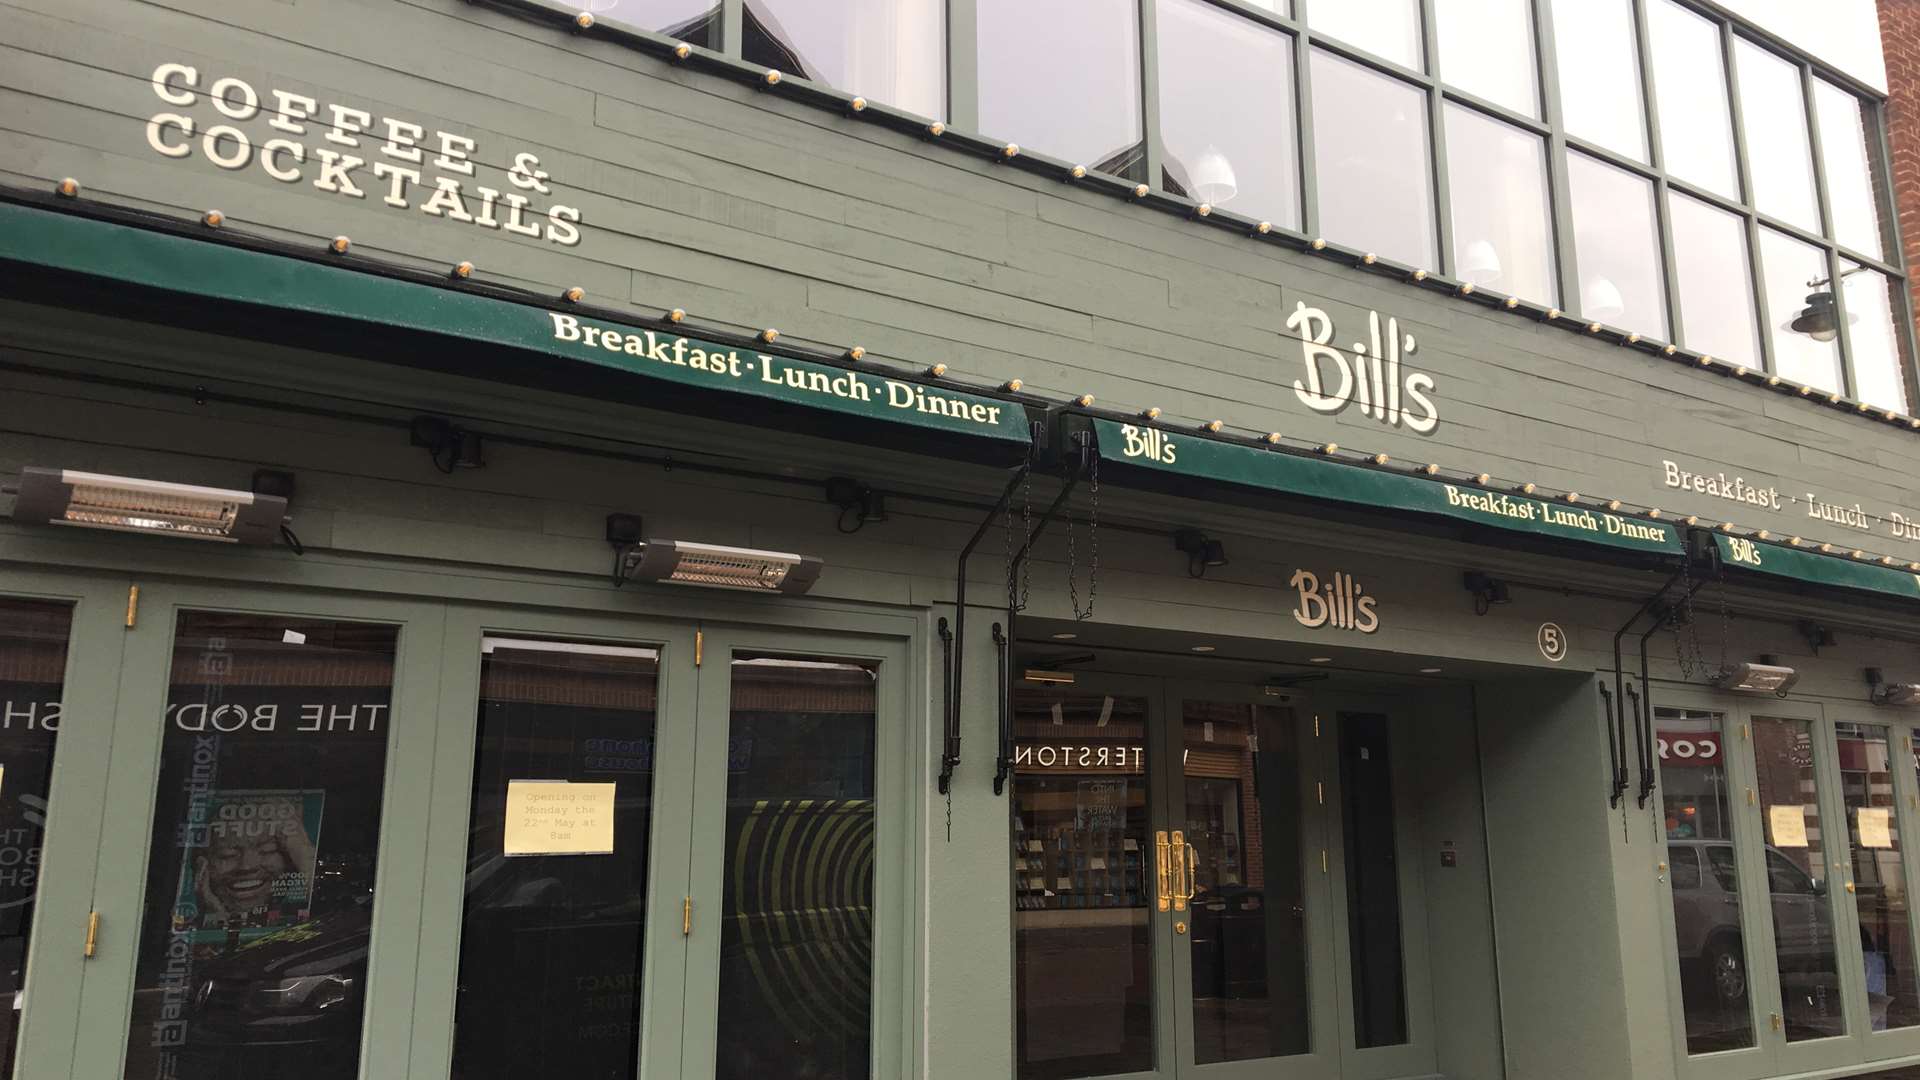 Bill's Restaurant will open its doors on Monday